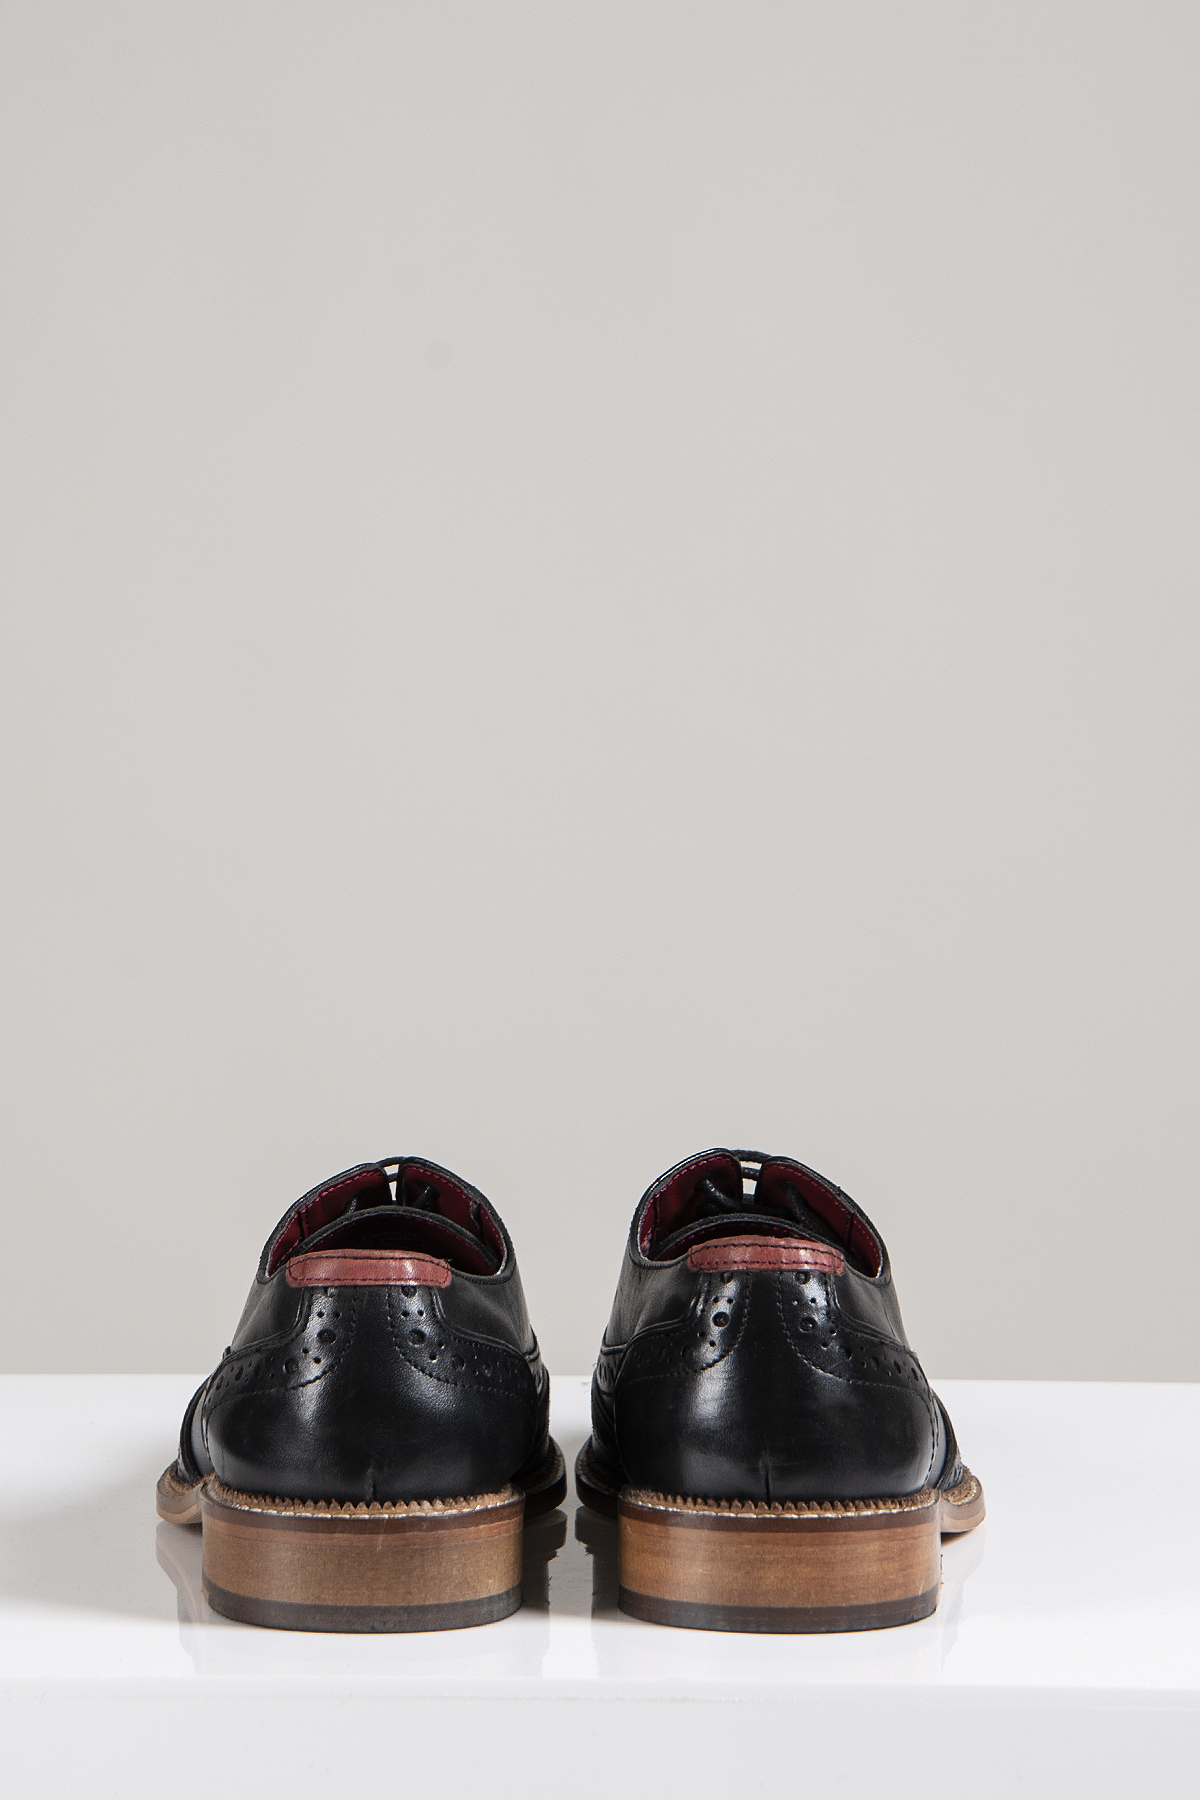 Marc Darcy Larkin Black Leather Brogue Shoes